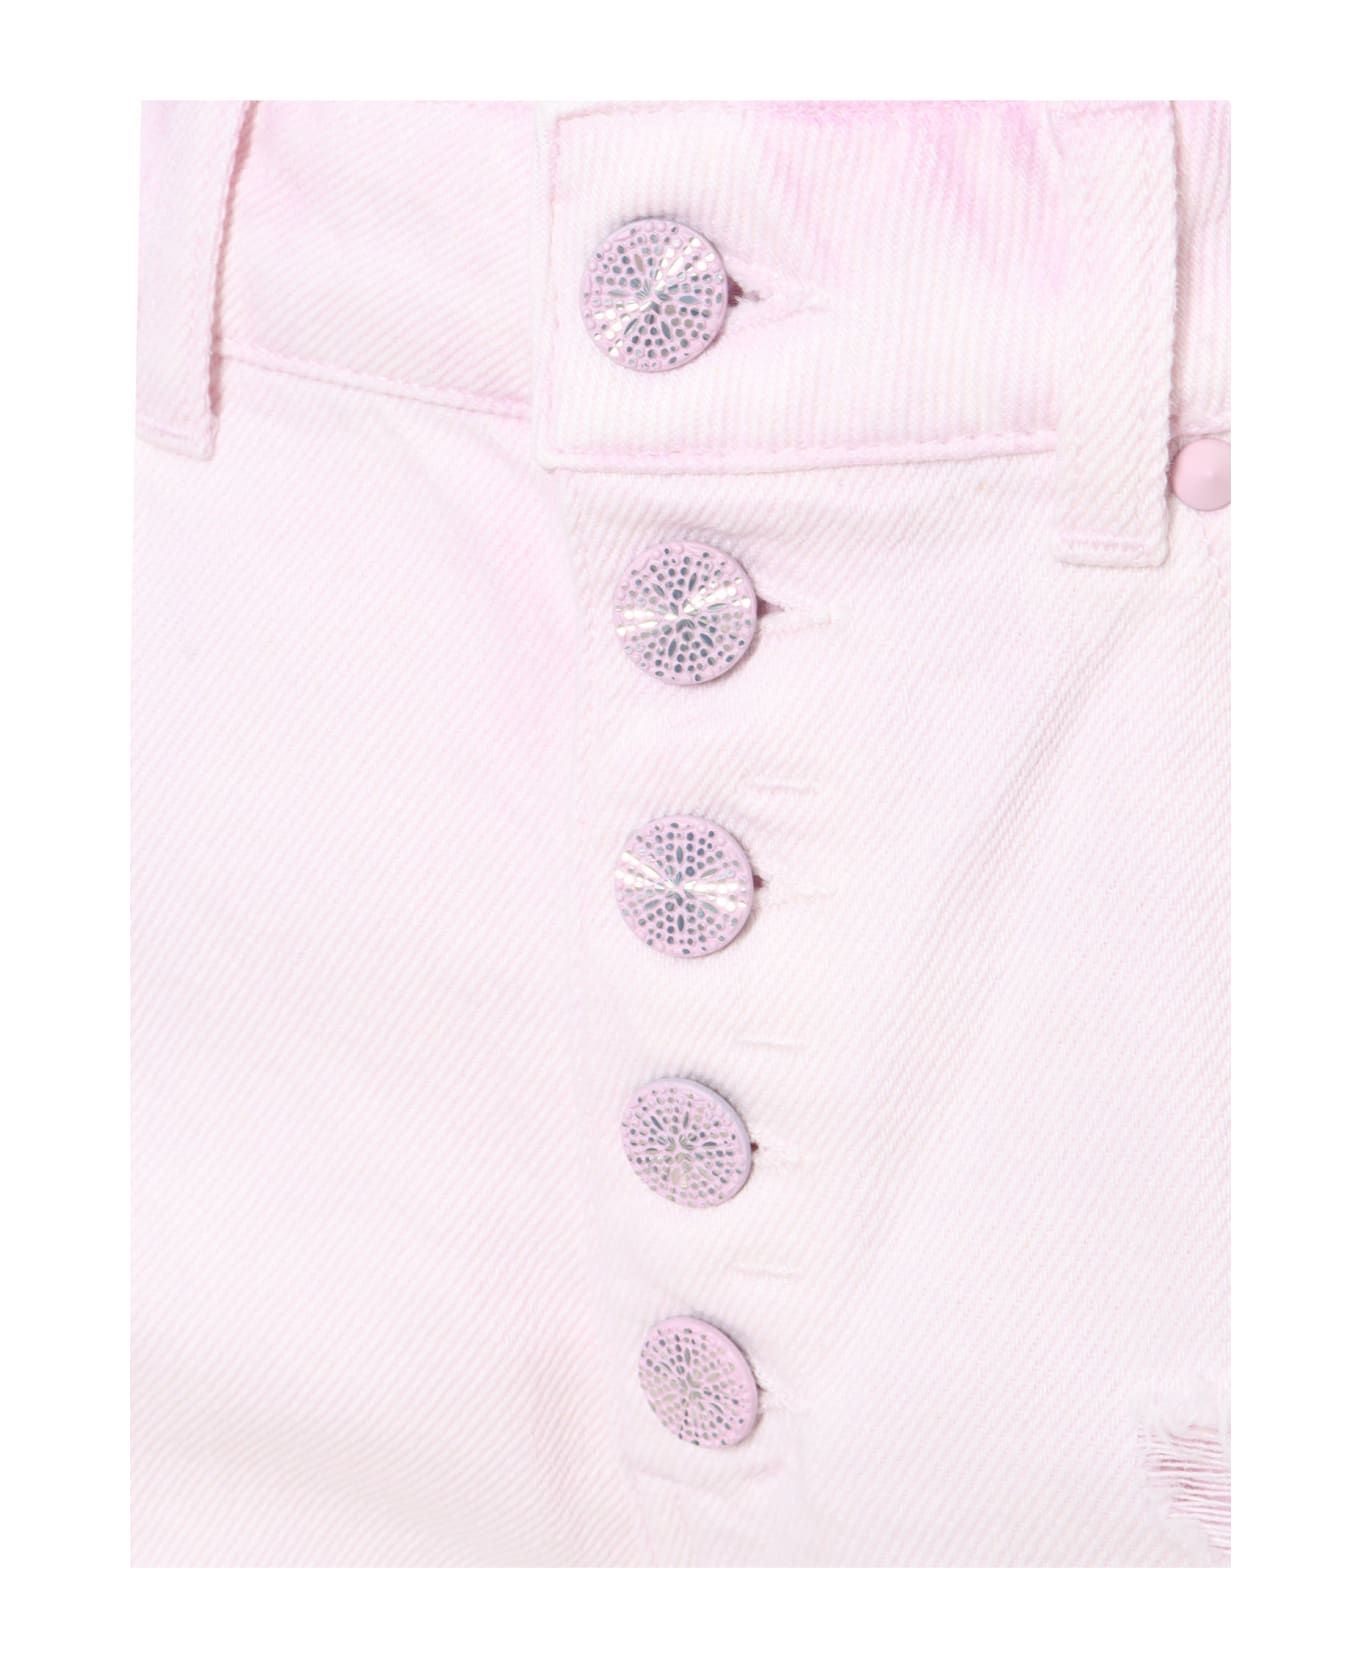 Dondup Frayed Pink Jeans - MALVA デニム